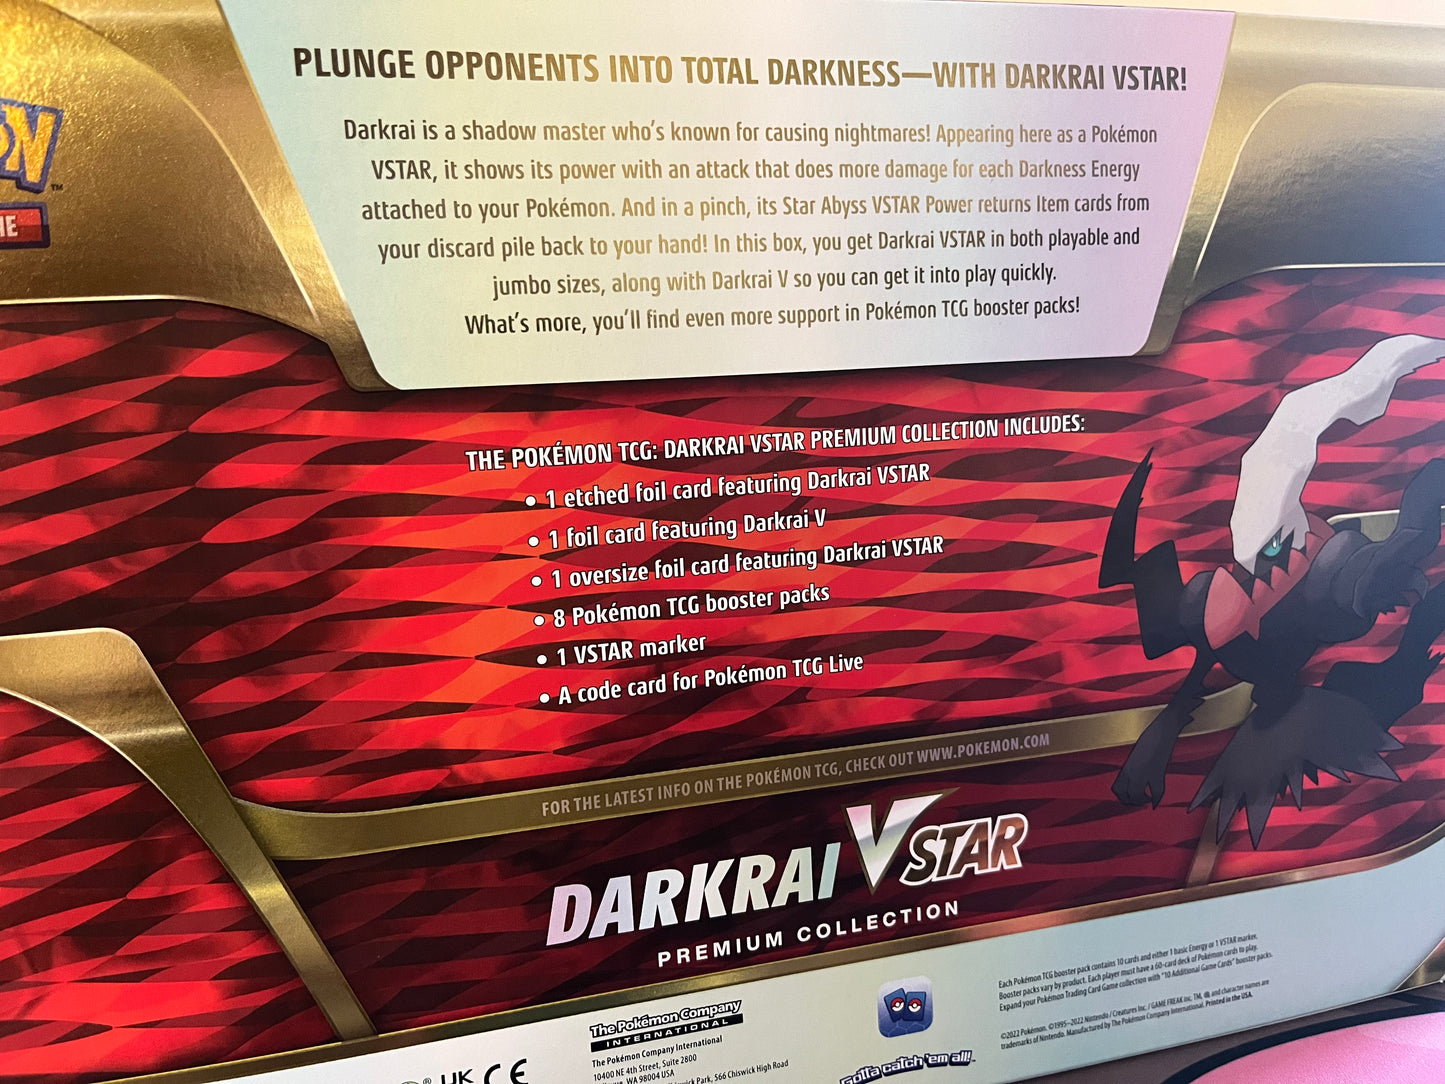 Darkrai VStar Premium Collection